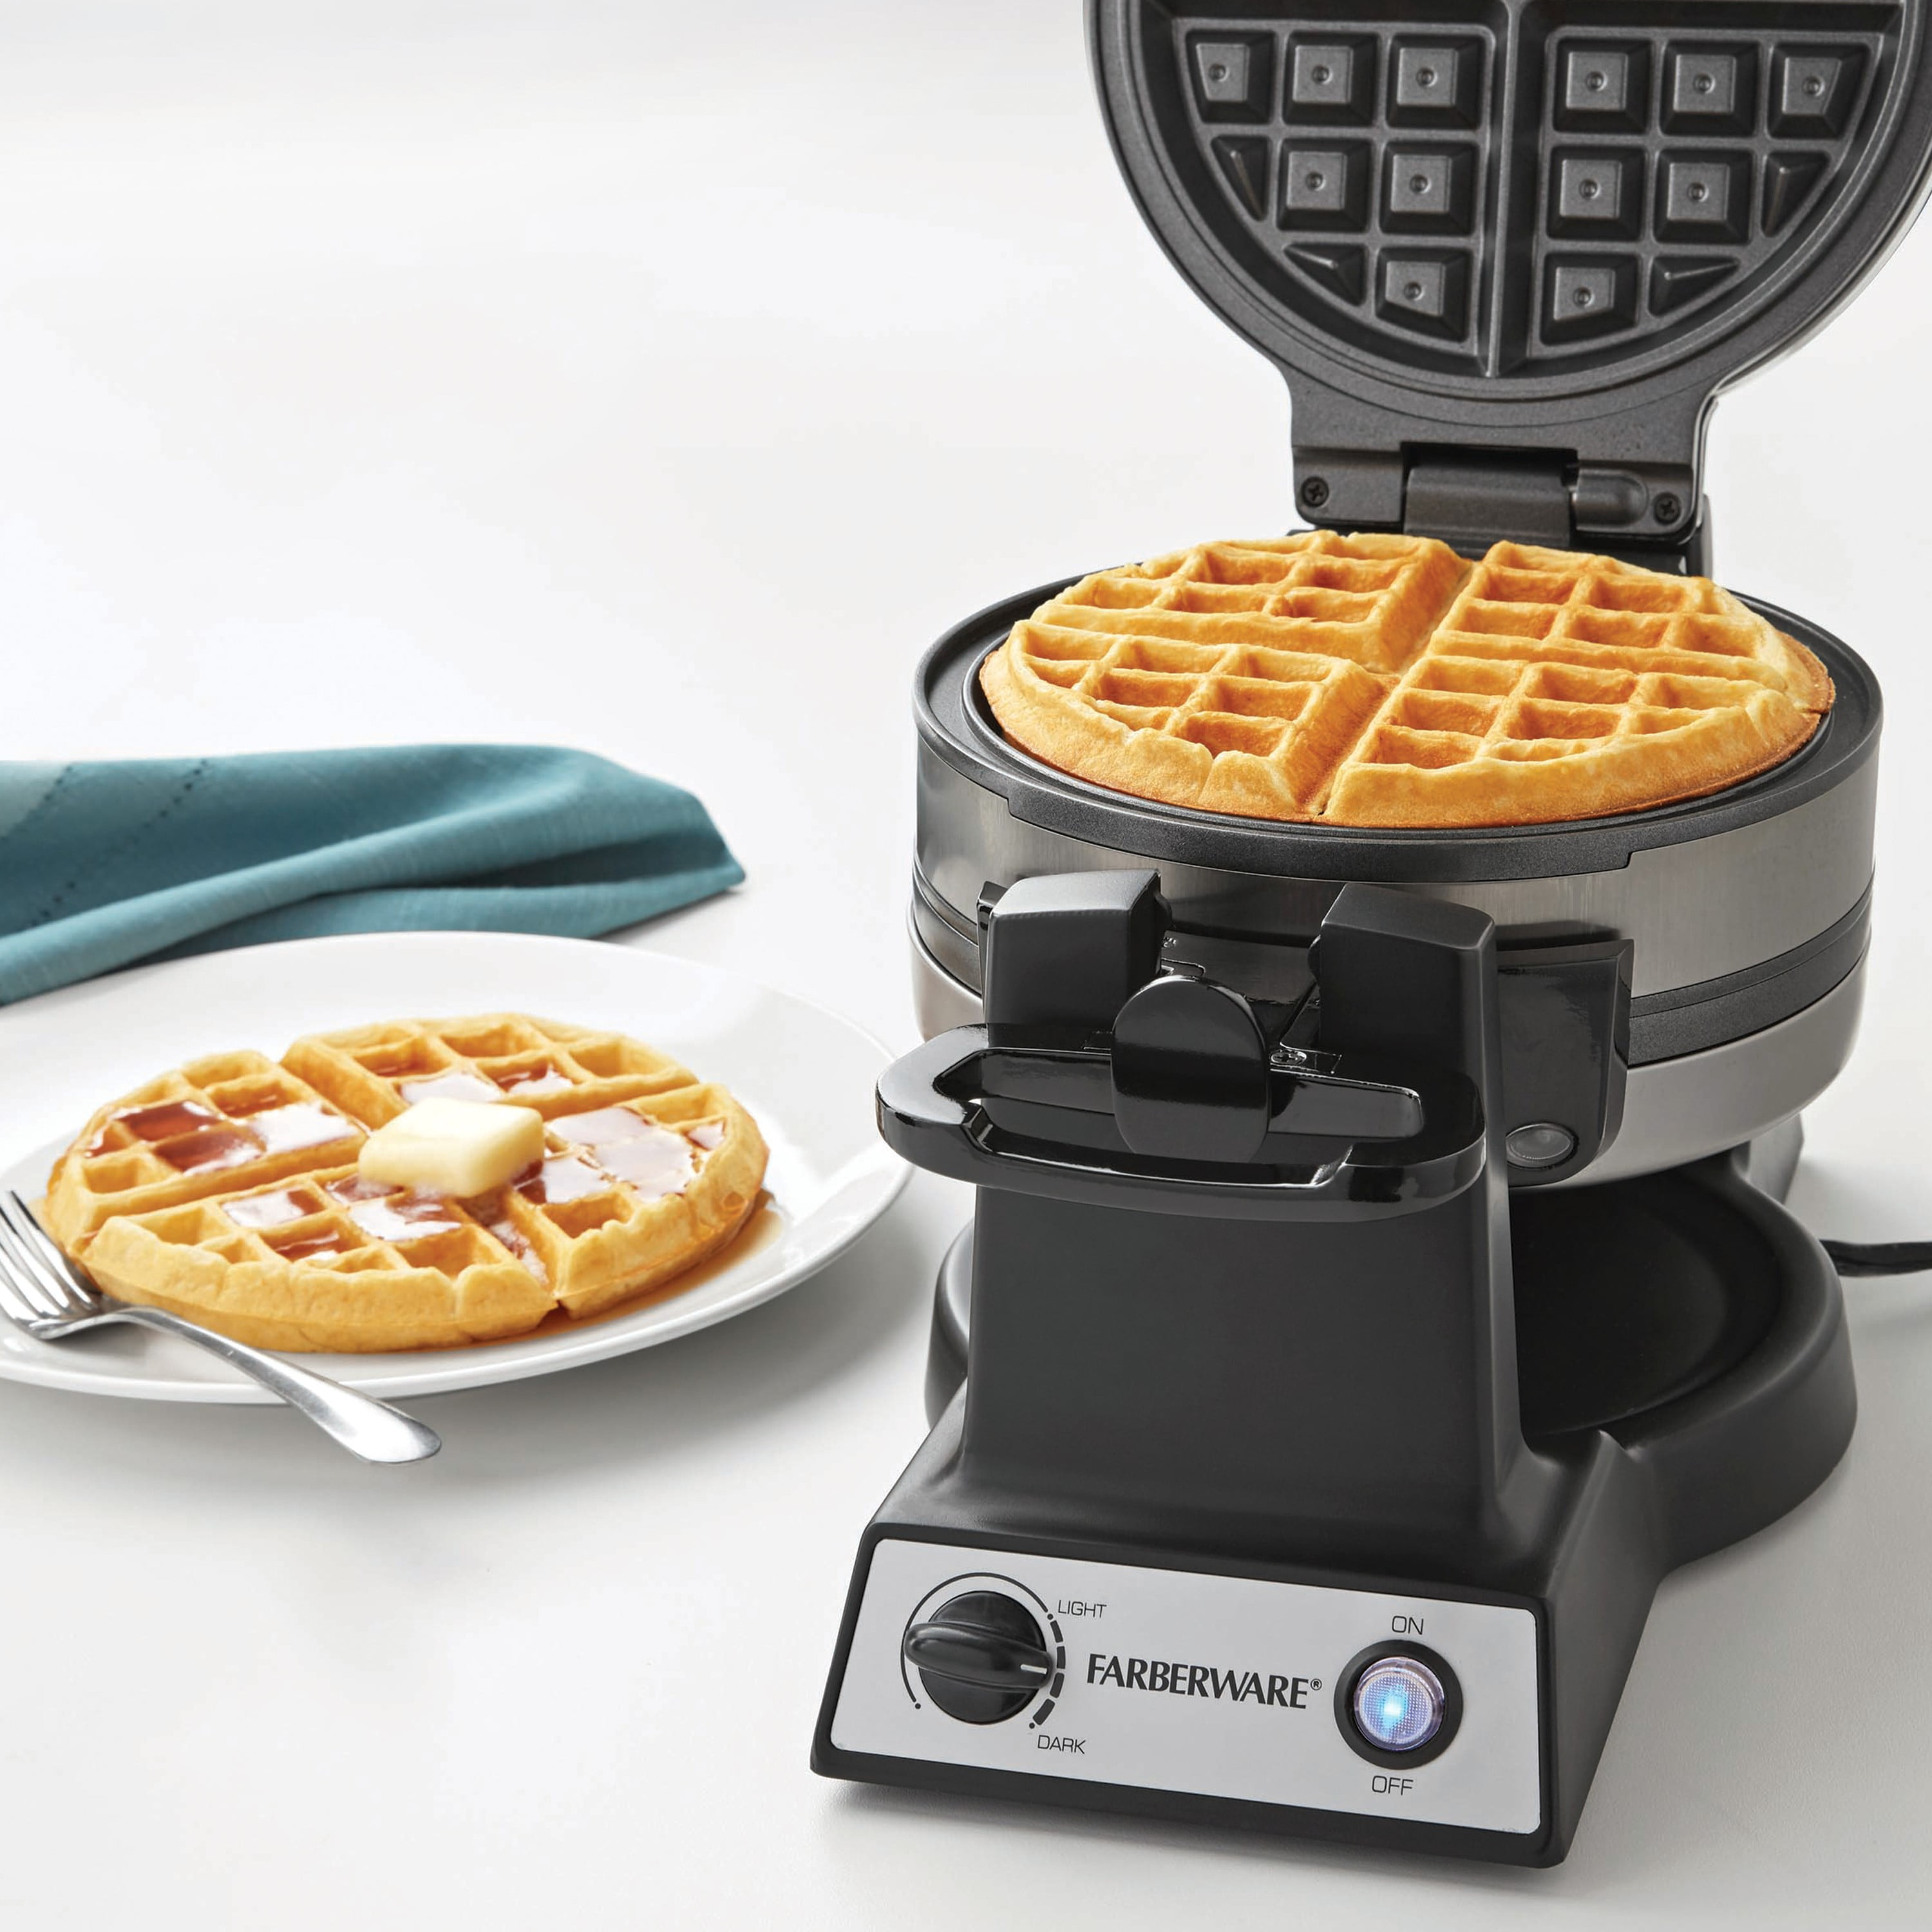 Farberware 4 slice waffle maker - appliances - by owner - sale